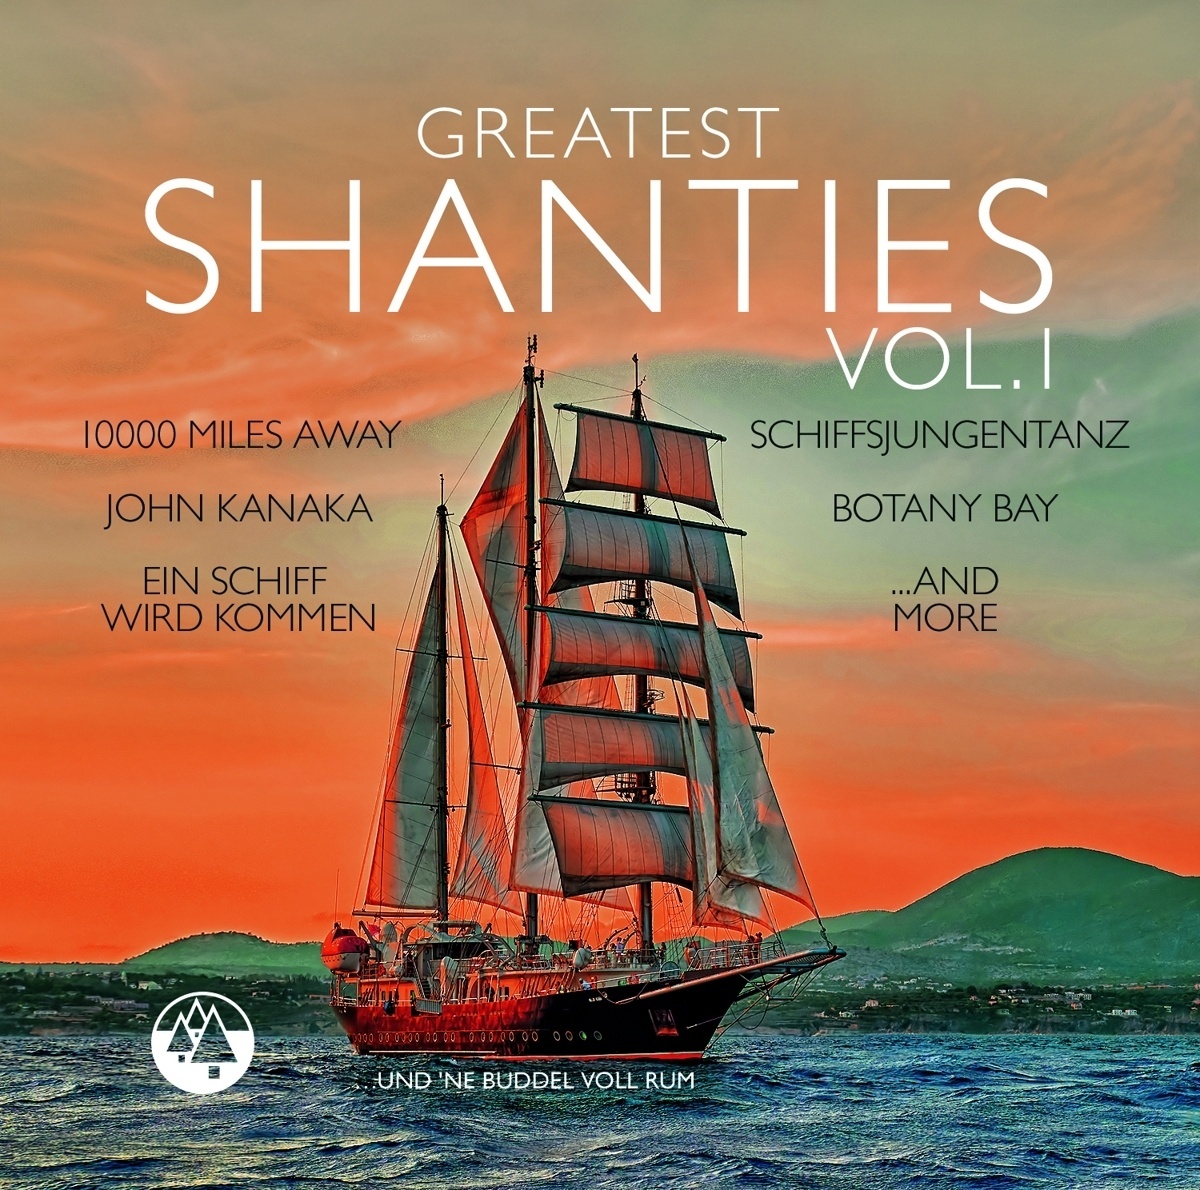 GREATEST SHANTIES VOL. 1 (UND 'NE BUDDEL VOLL RUM) - Various. (CD)